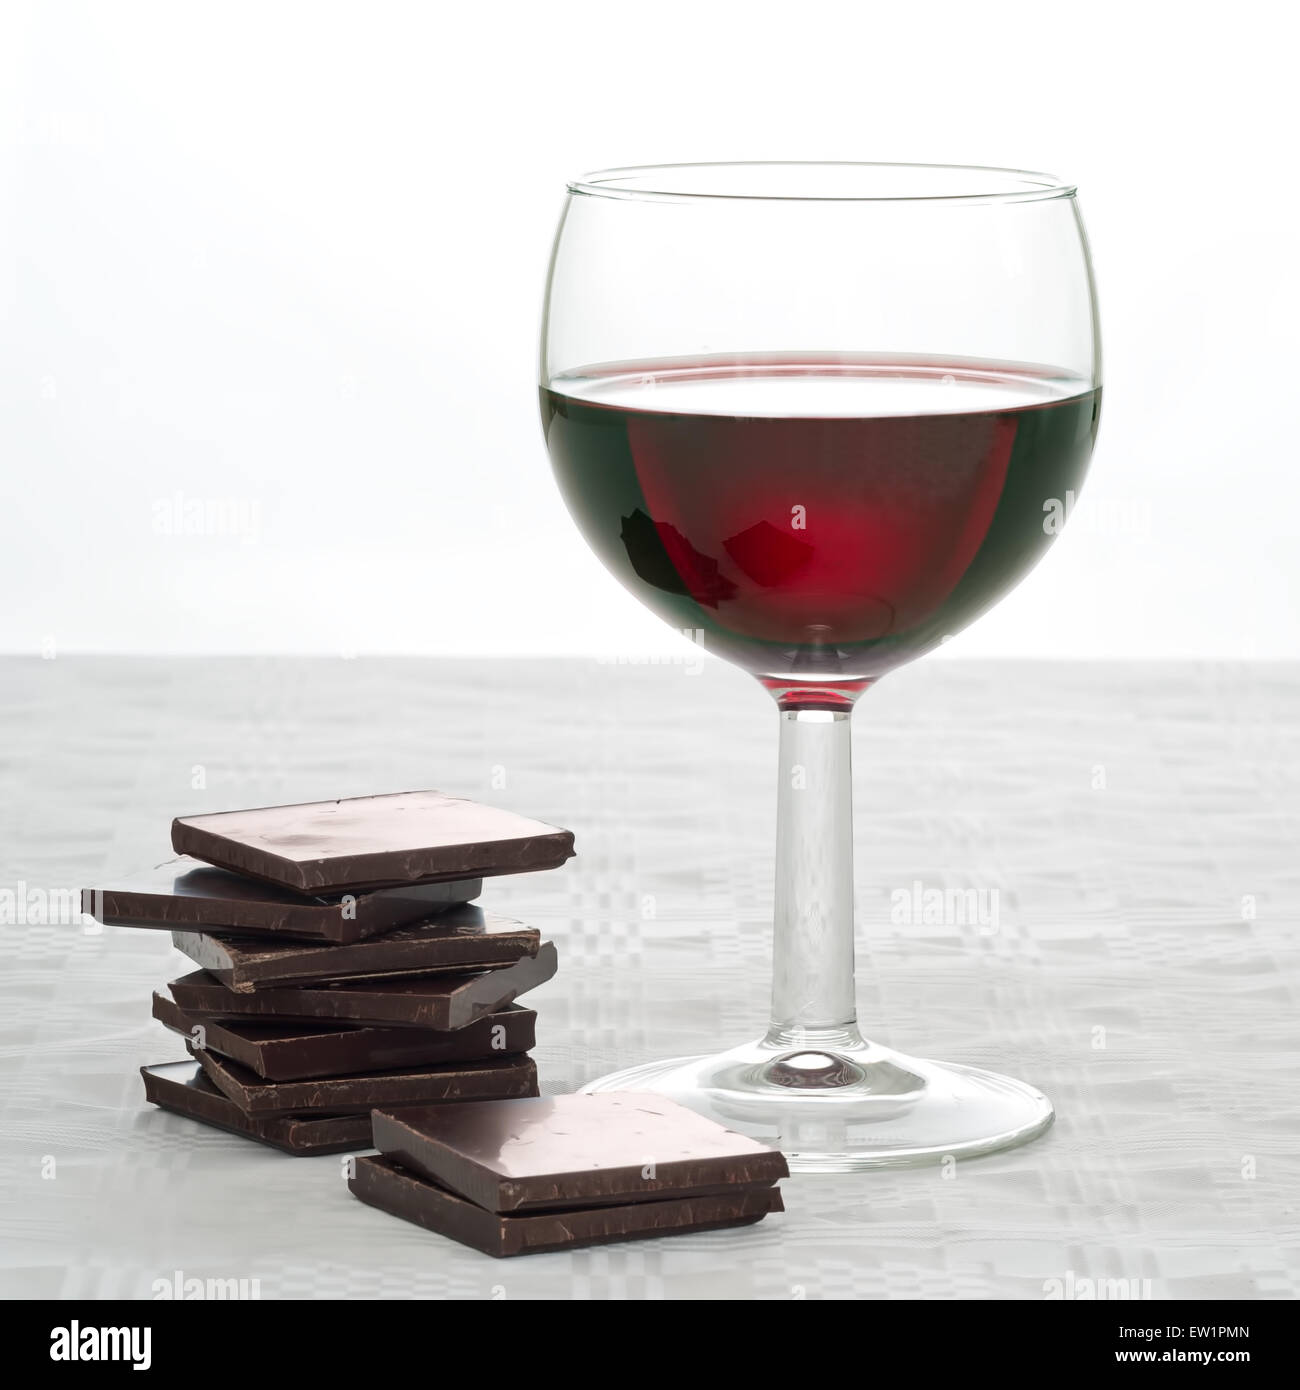 Healthy heart food. Red wine and dark chocolate. Stock Photo